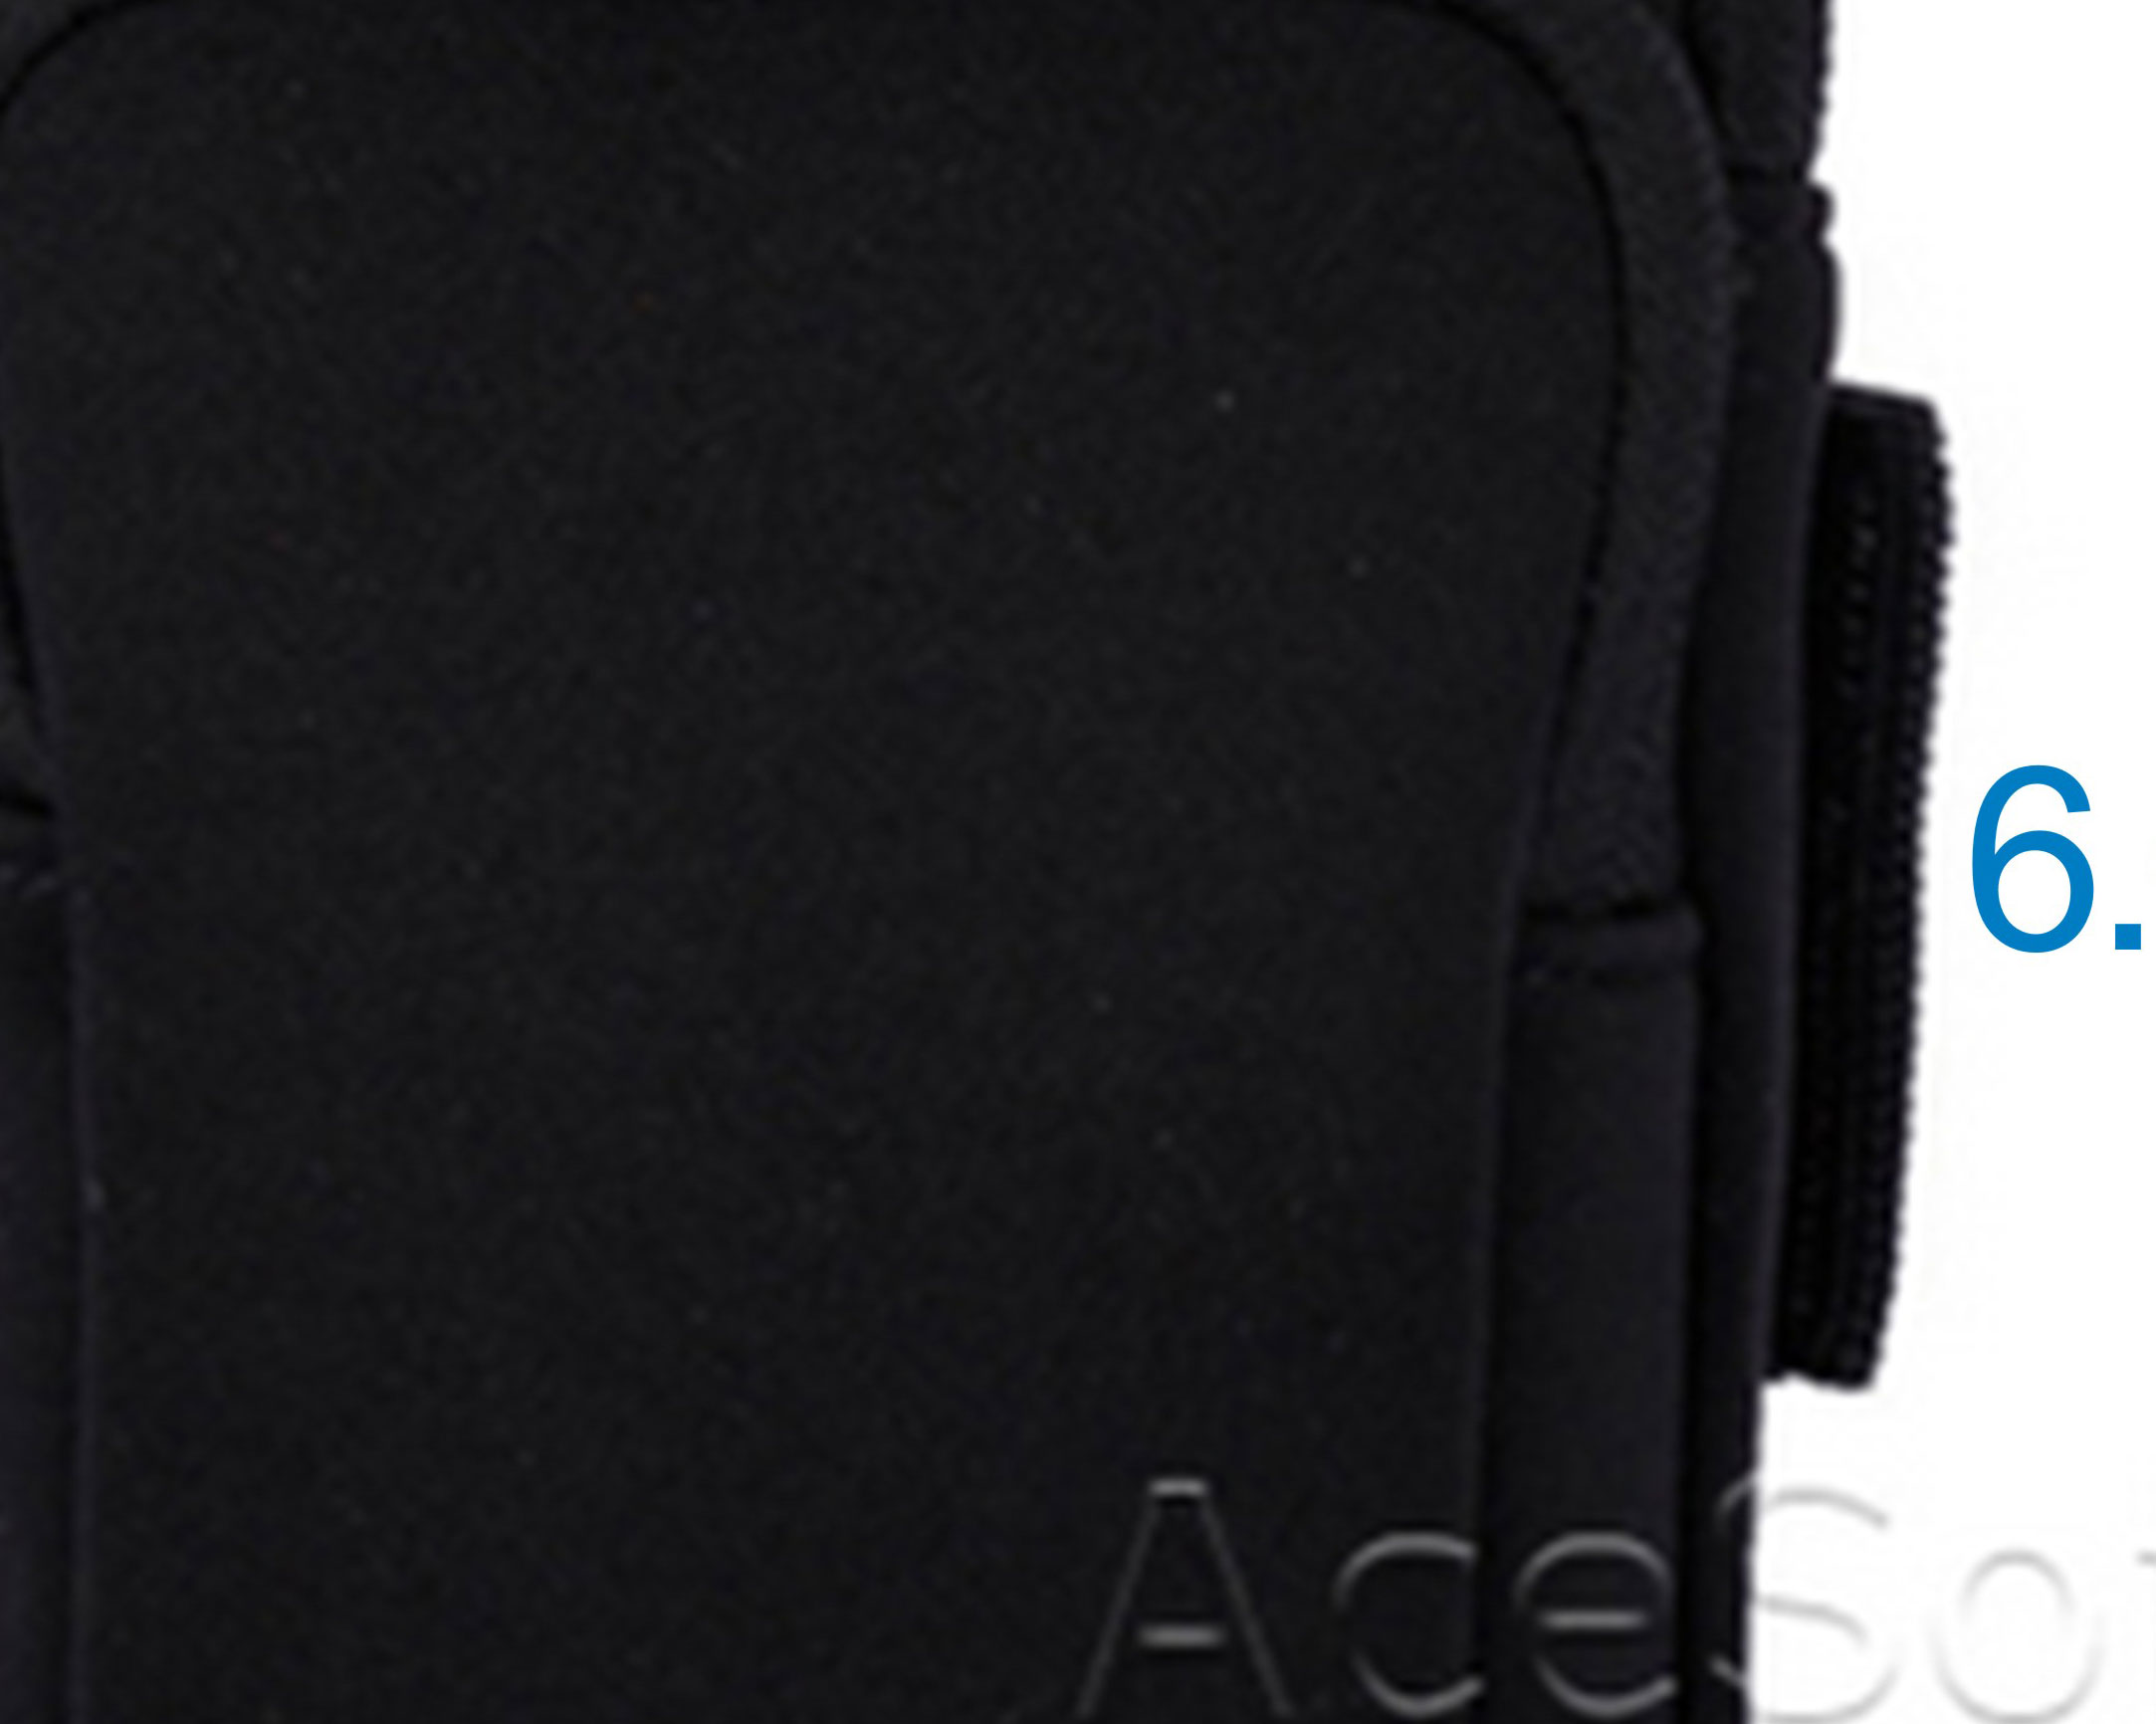 Buy Outdoor Sports Cellphone Arm Band Holder Bag Zipper Case BEST